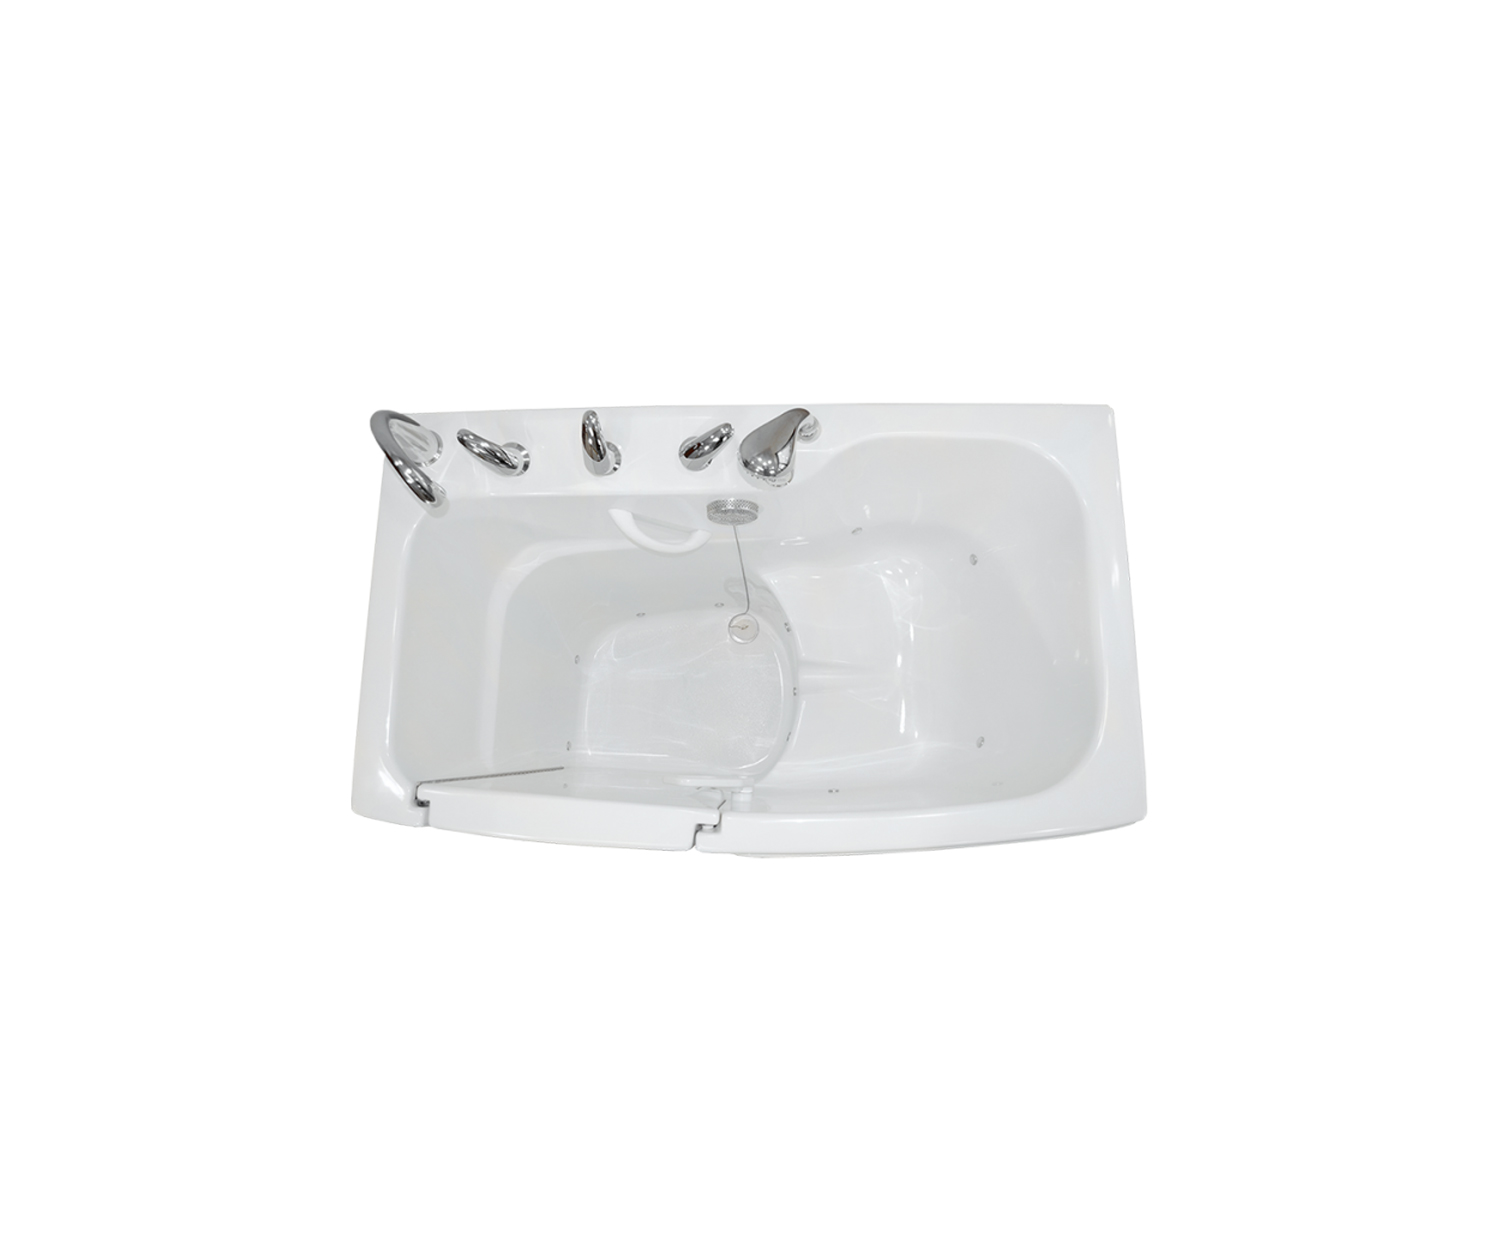 WT5029LSH 49.5 x 29 AcrylX Alcove Left-Hand Drain Bathtub in White 